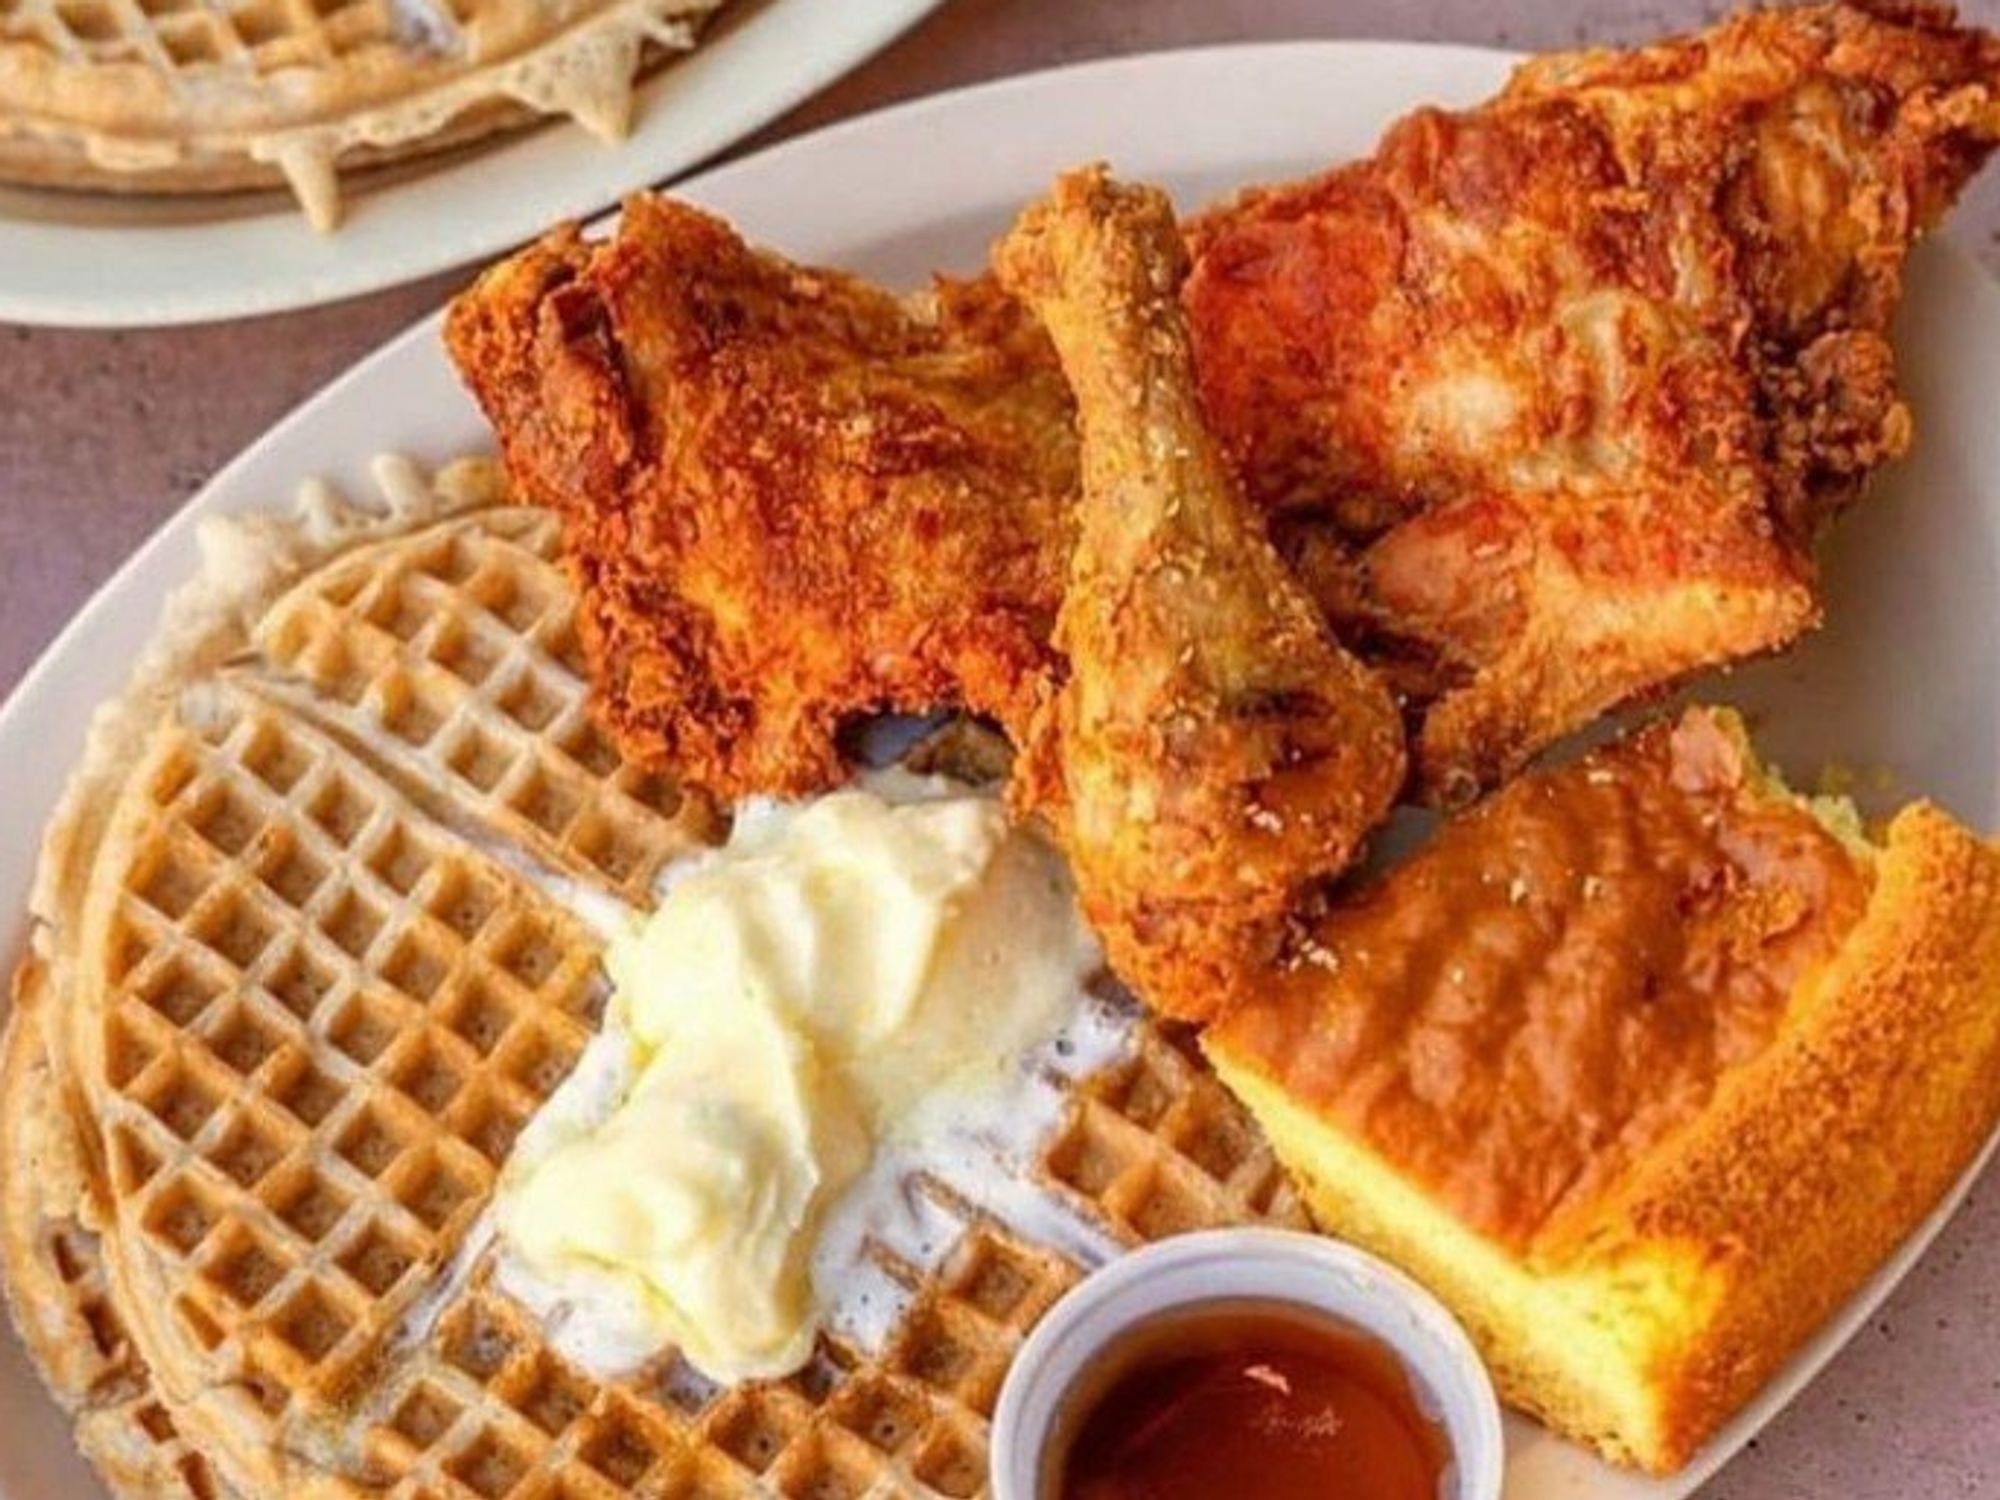 Johnny's Chicken & Waffles